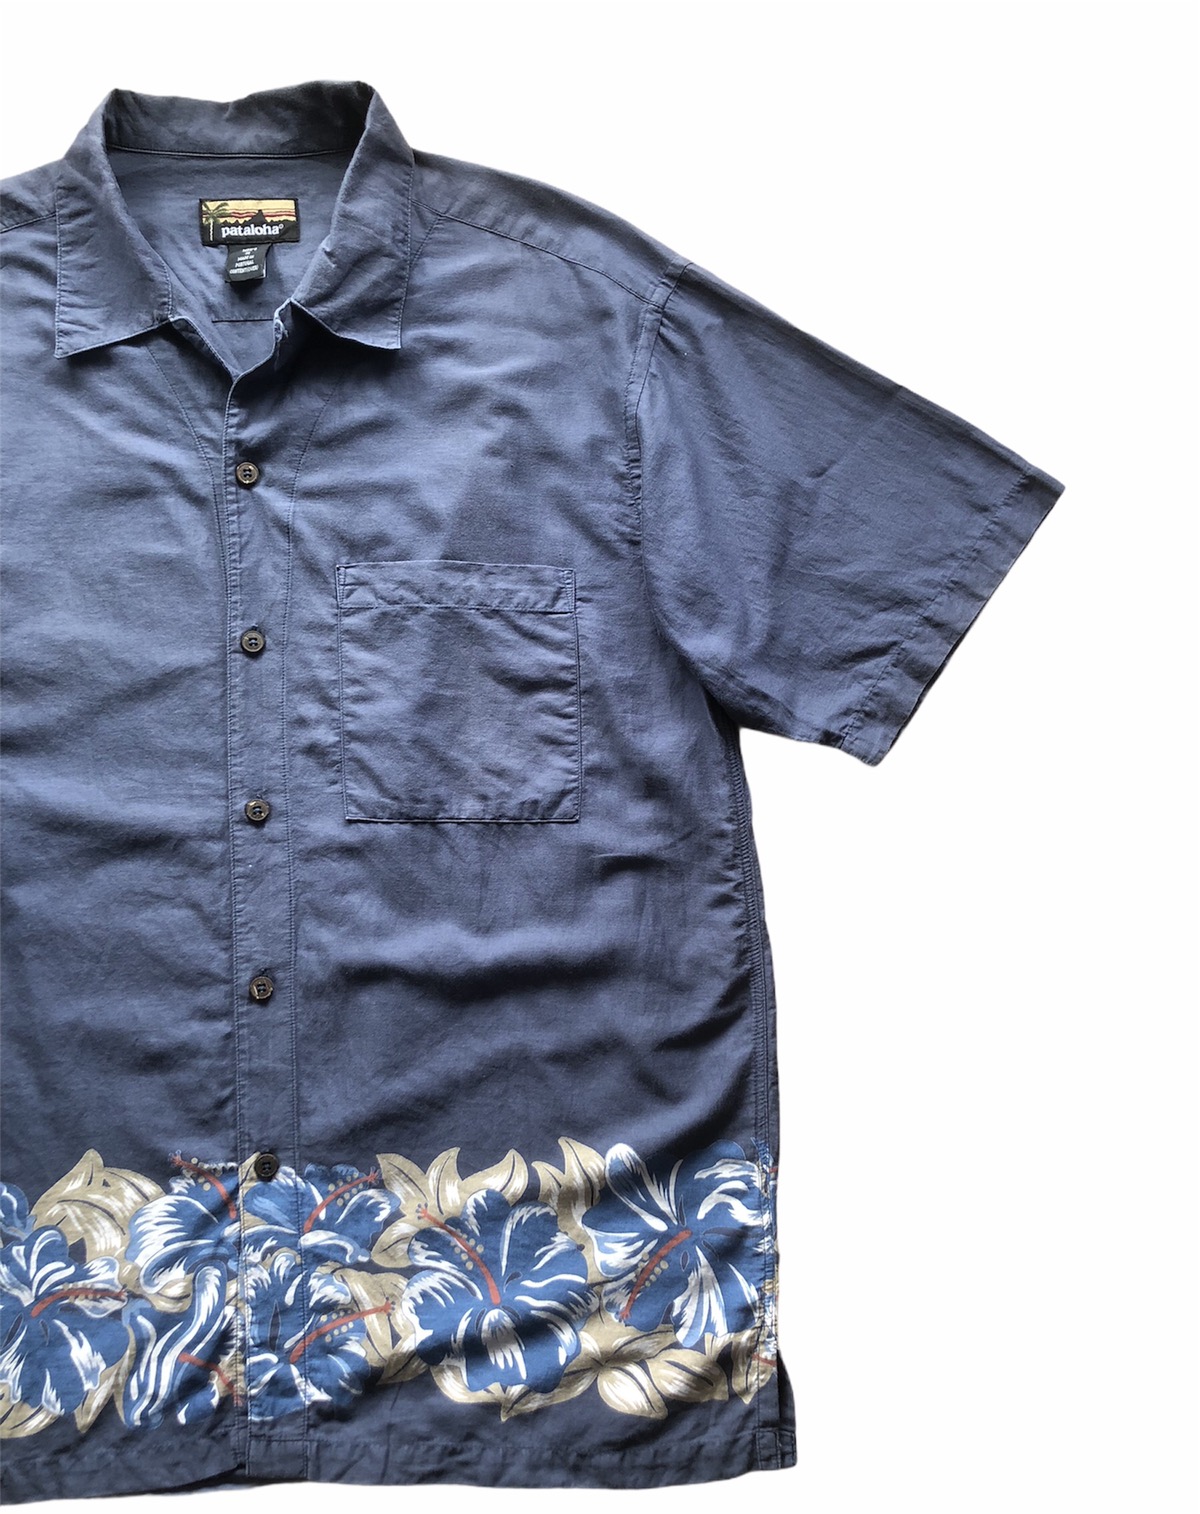 Vintage 80s Pataloha Hawaian surf Cotton shirt - 3